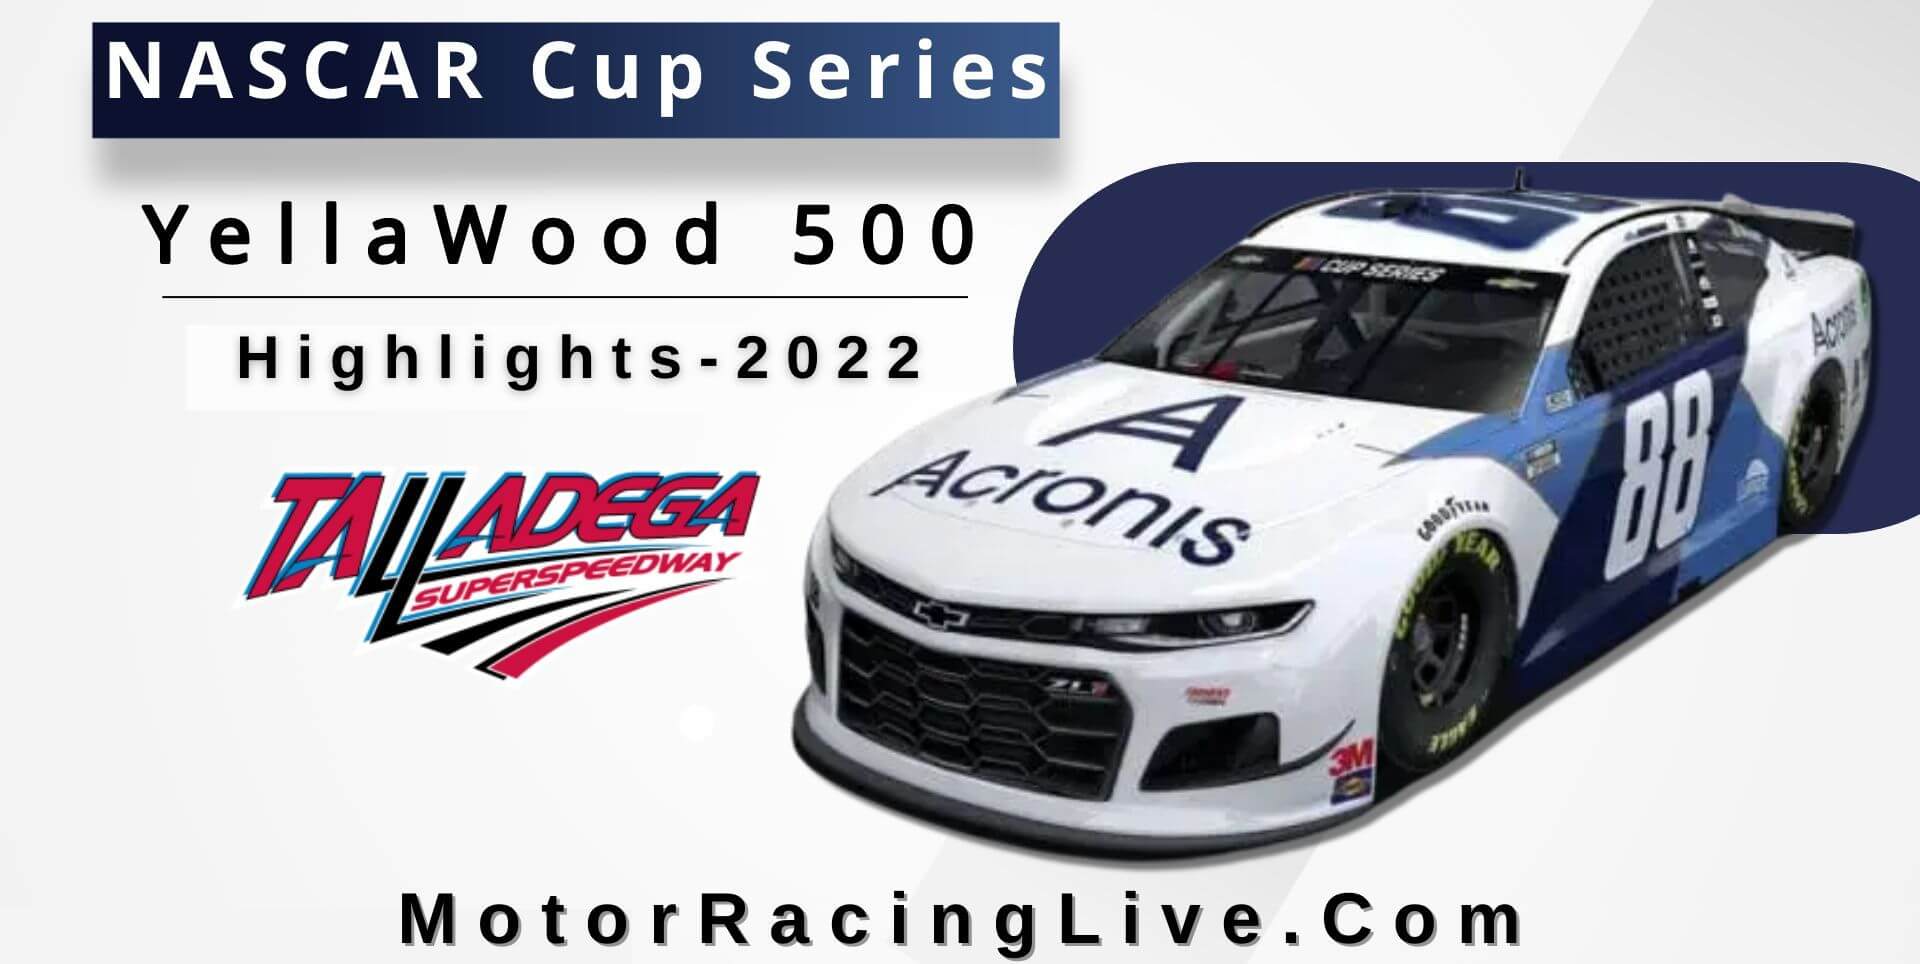 YellaWood 500 Highlights 2022 NASCAR Cup